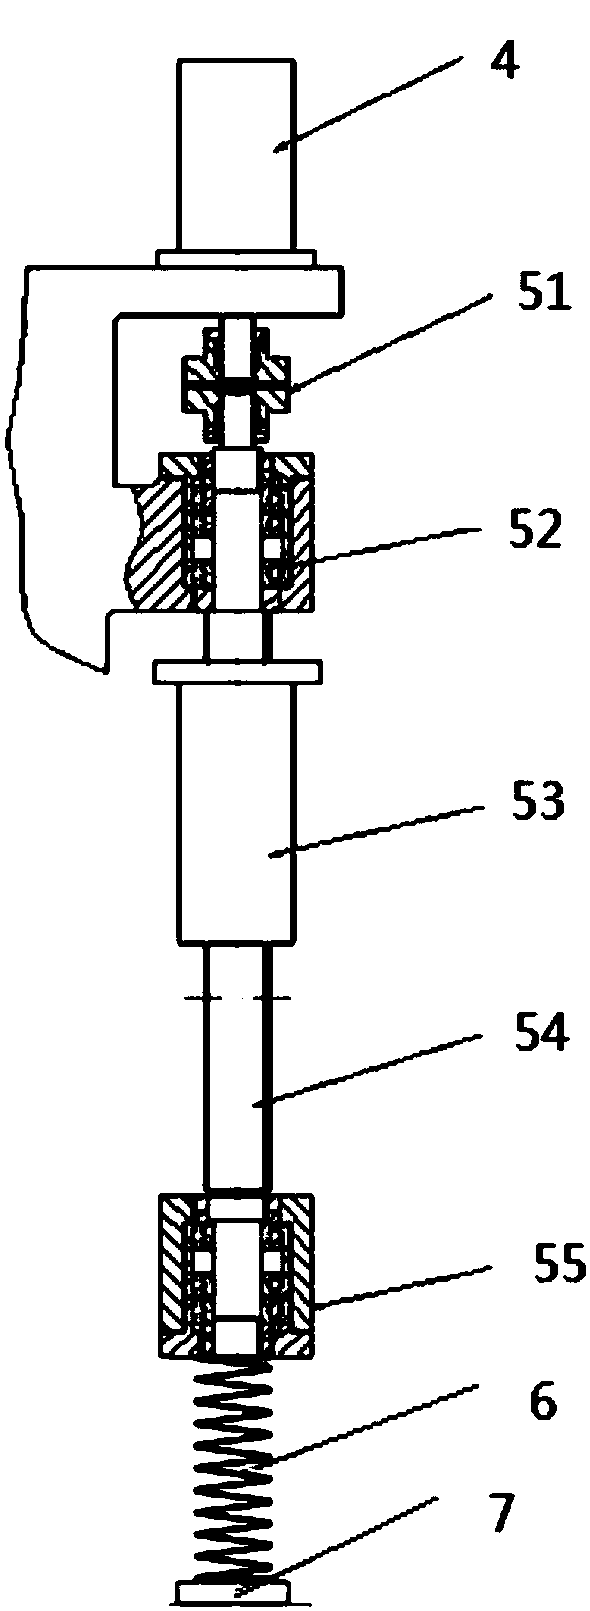 Alternating load loading device for bearing testing machine, based on screw rod transmission mechanism